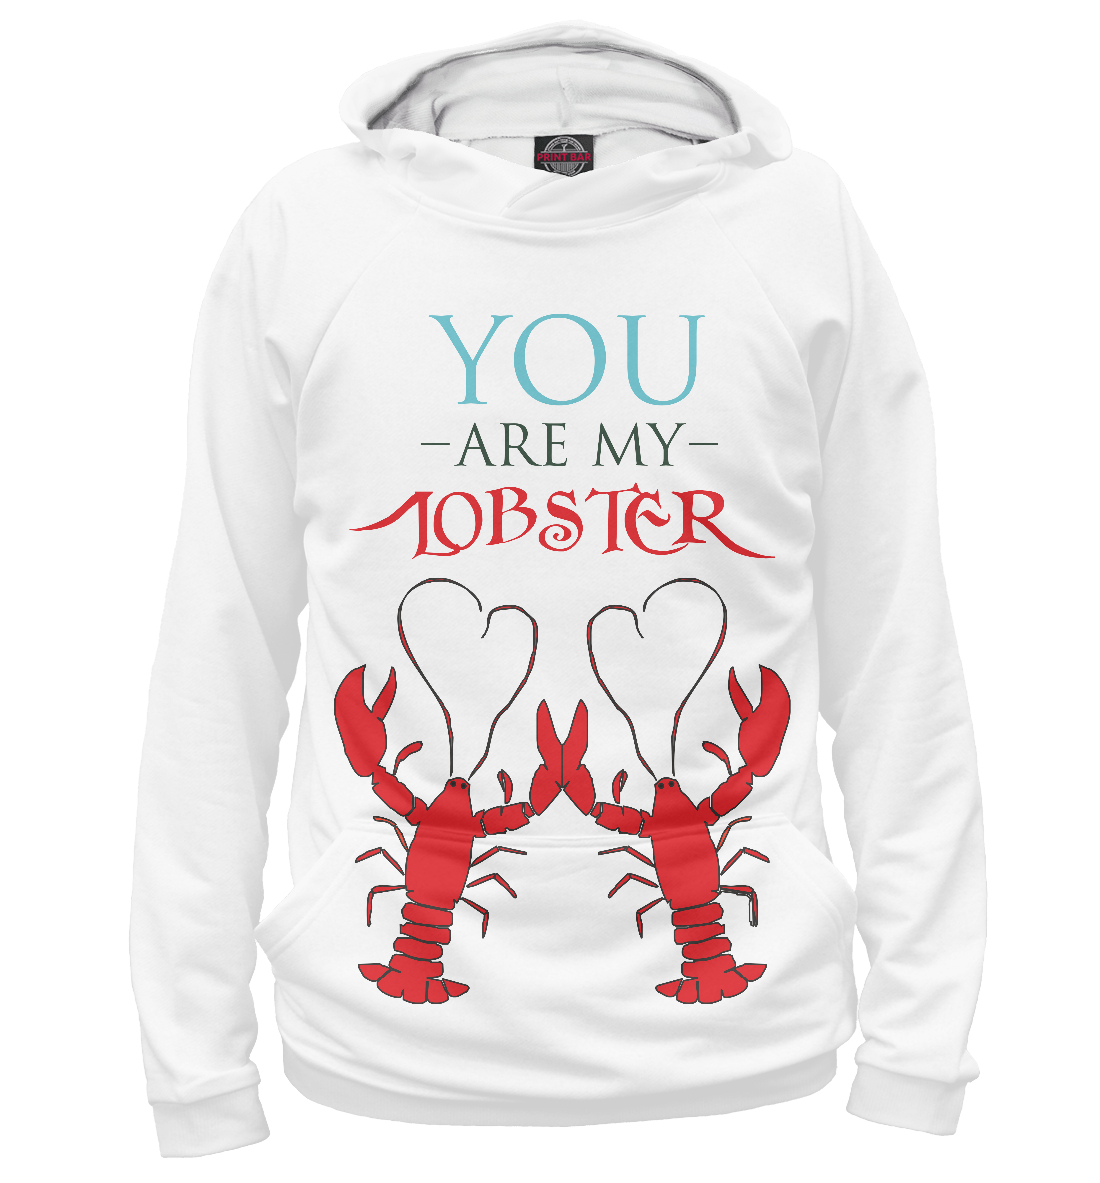 Мужской Худи с принтом You are my lobster, артикул 14F-969615-hud-2mp